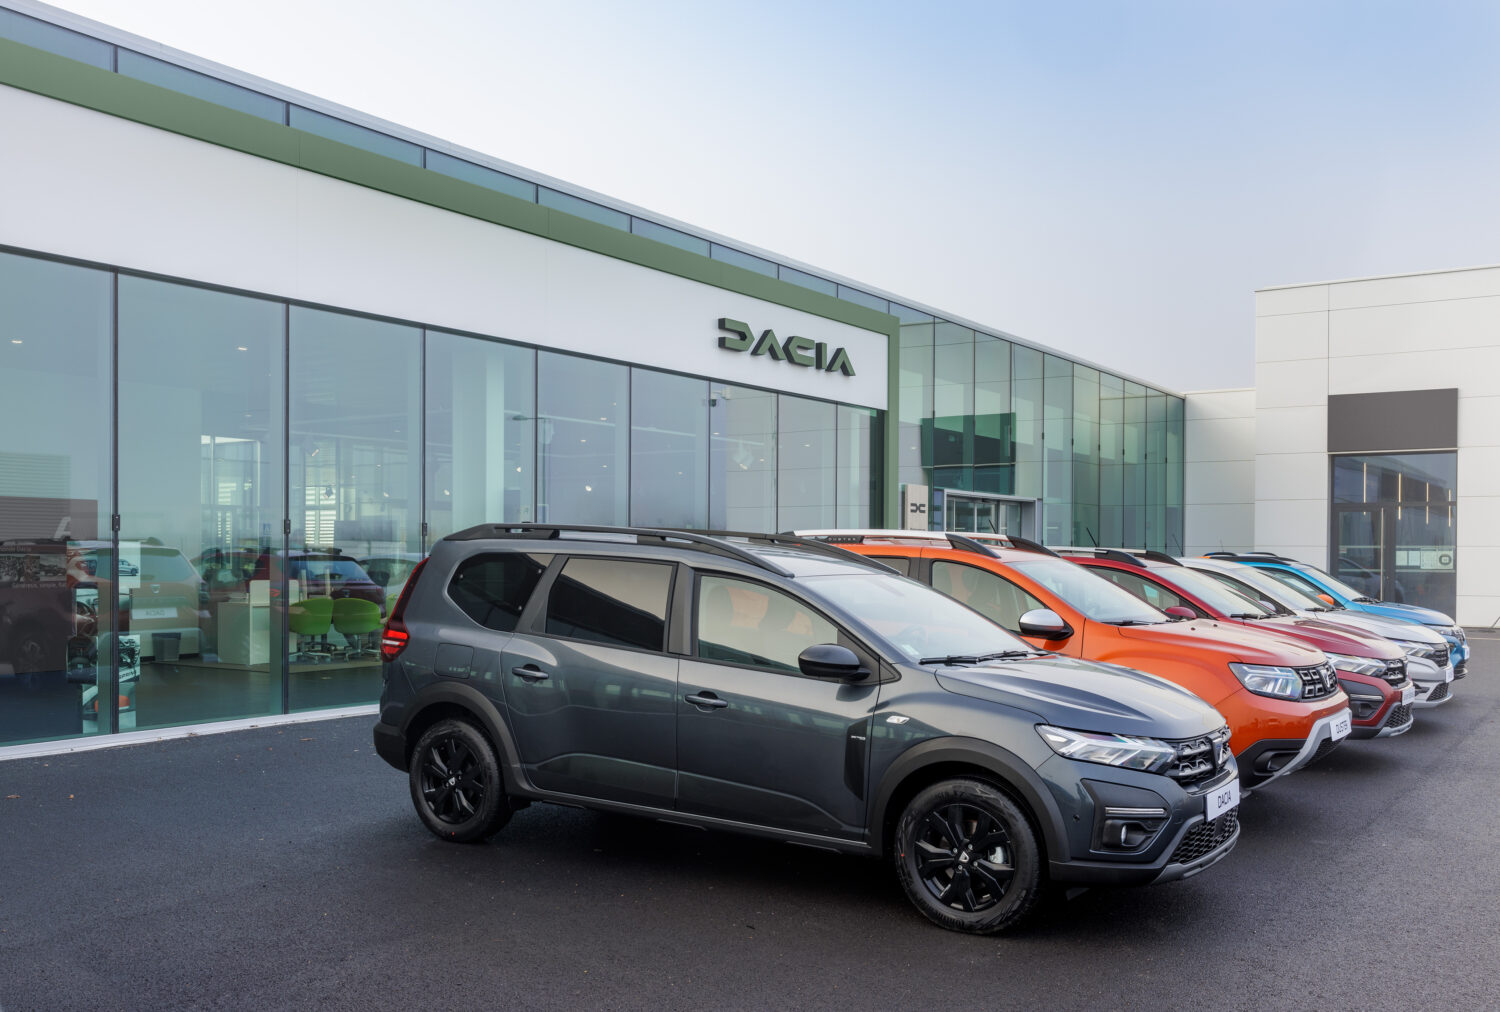 2022 - New visual identity of Dacia network